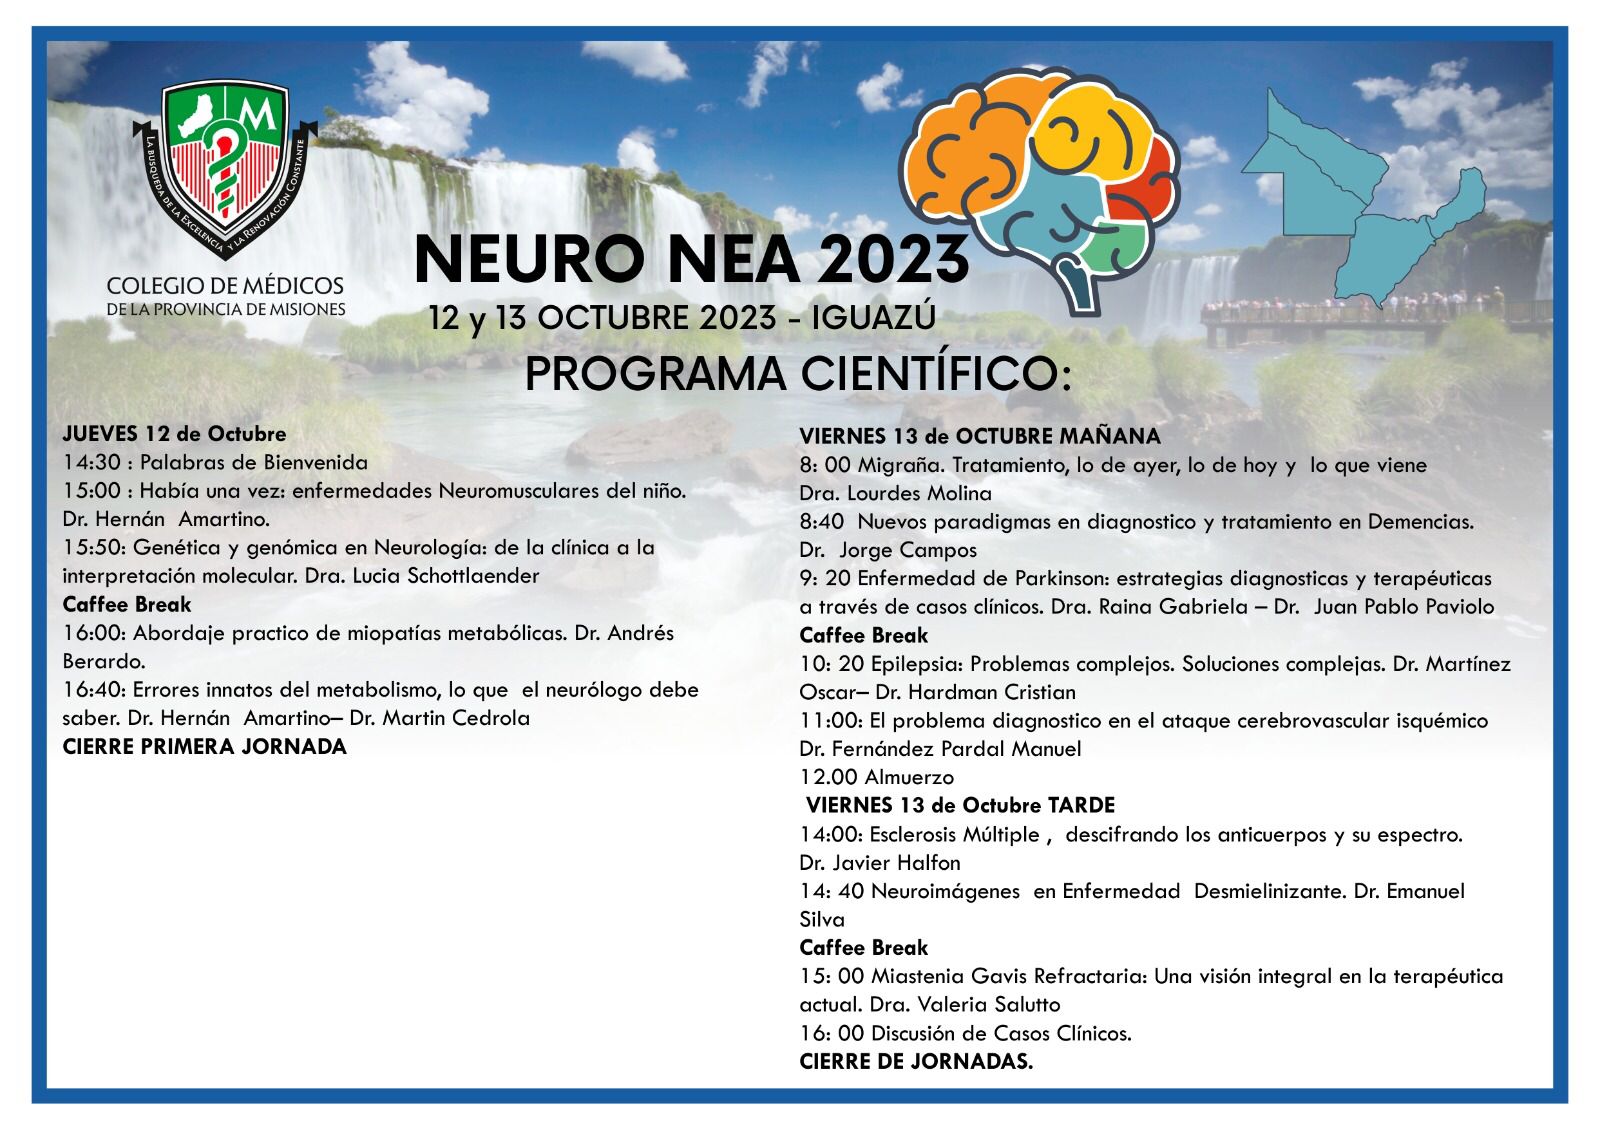 NEURO NEA 2023-PROGRAMA CIENTÍFICO EN IGUAZÚ